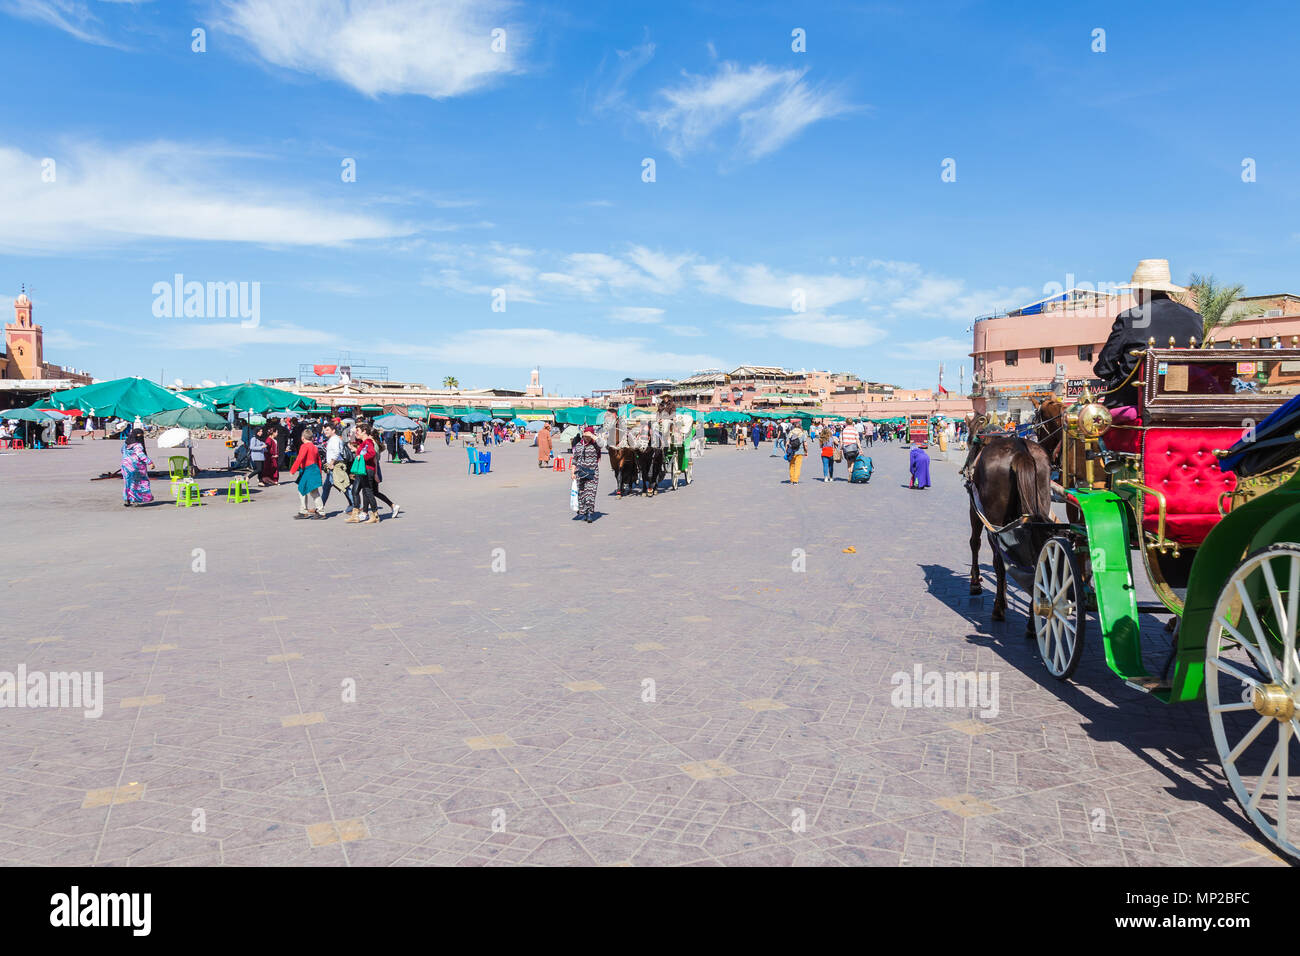 Jamaa el fna Square, Marrakech, Morocco. Stock Photo